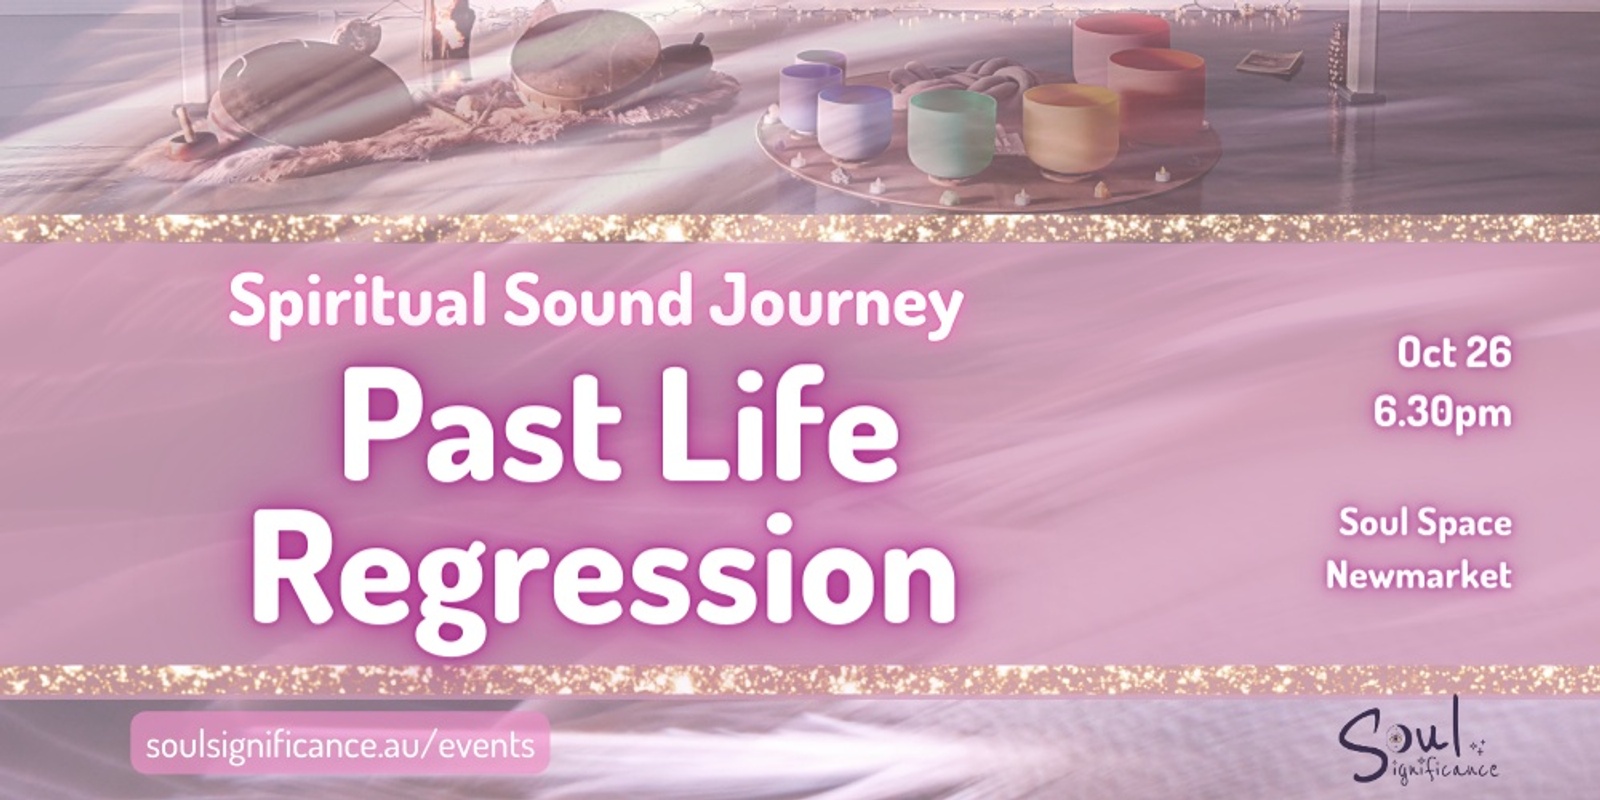 A Spiritual Sound Journey - Past Life Regression